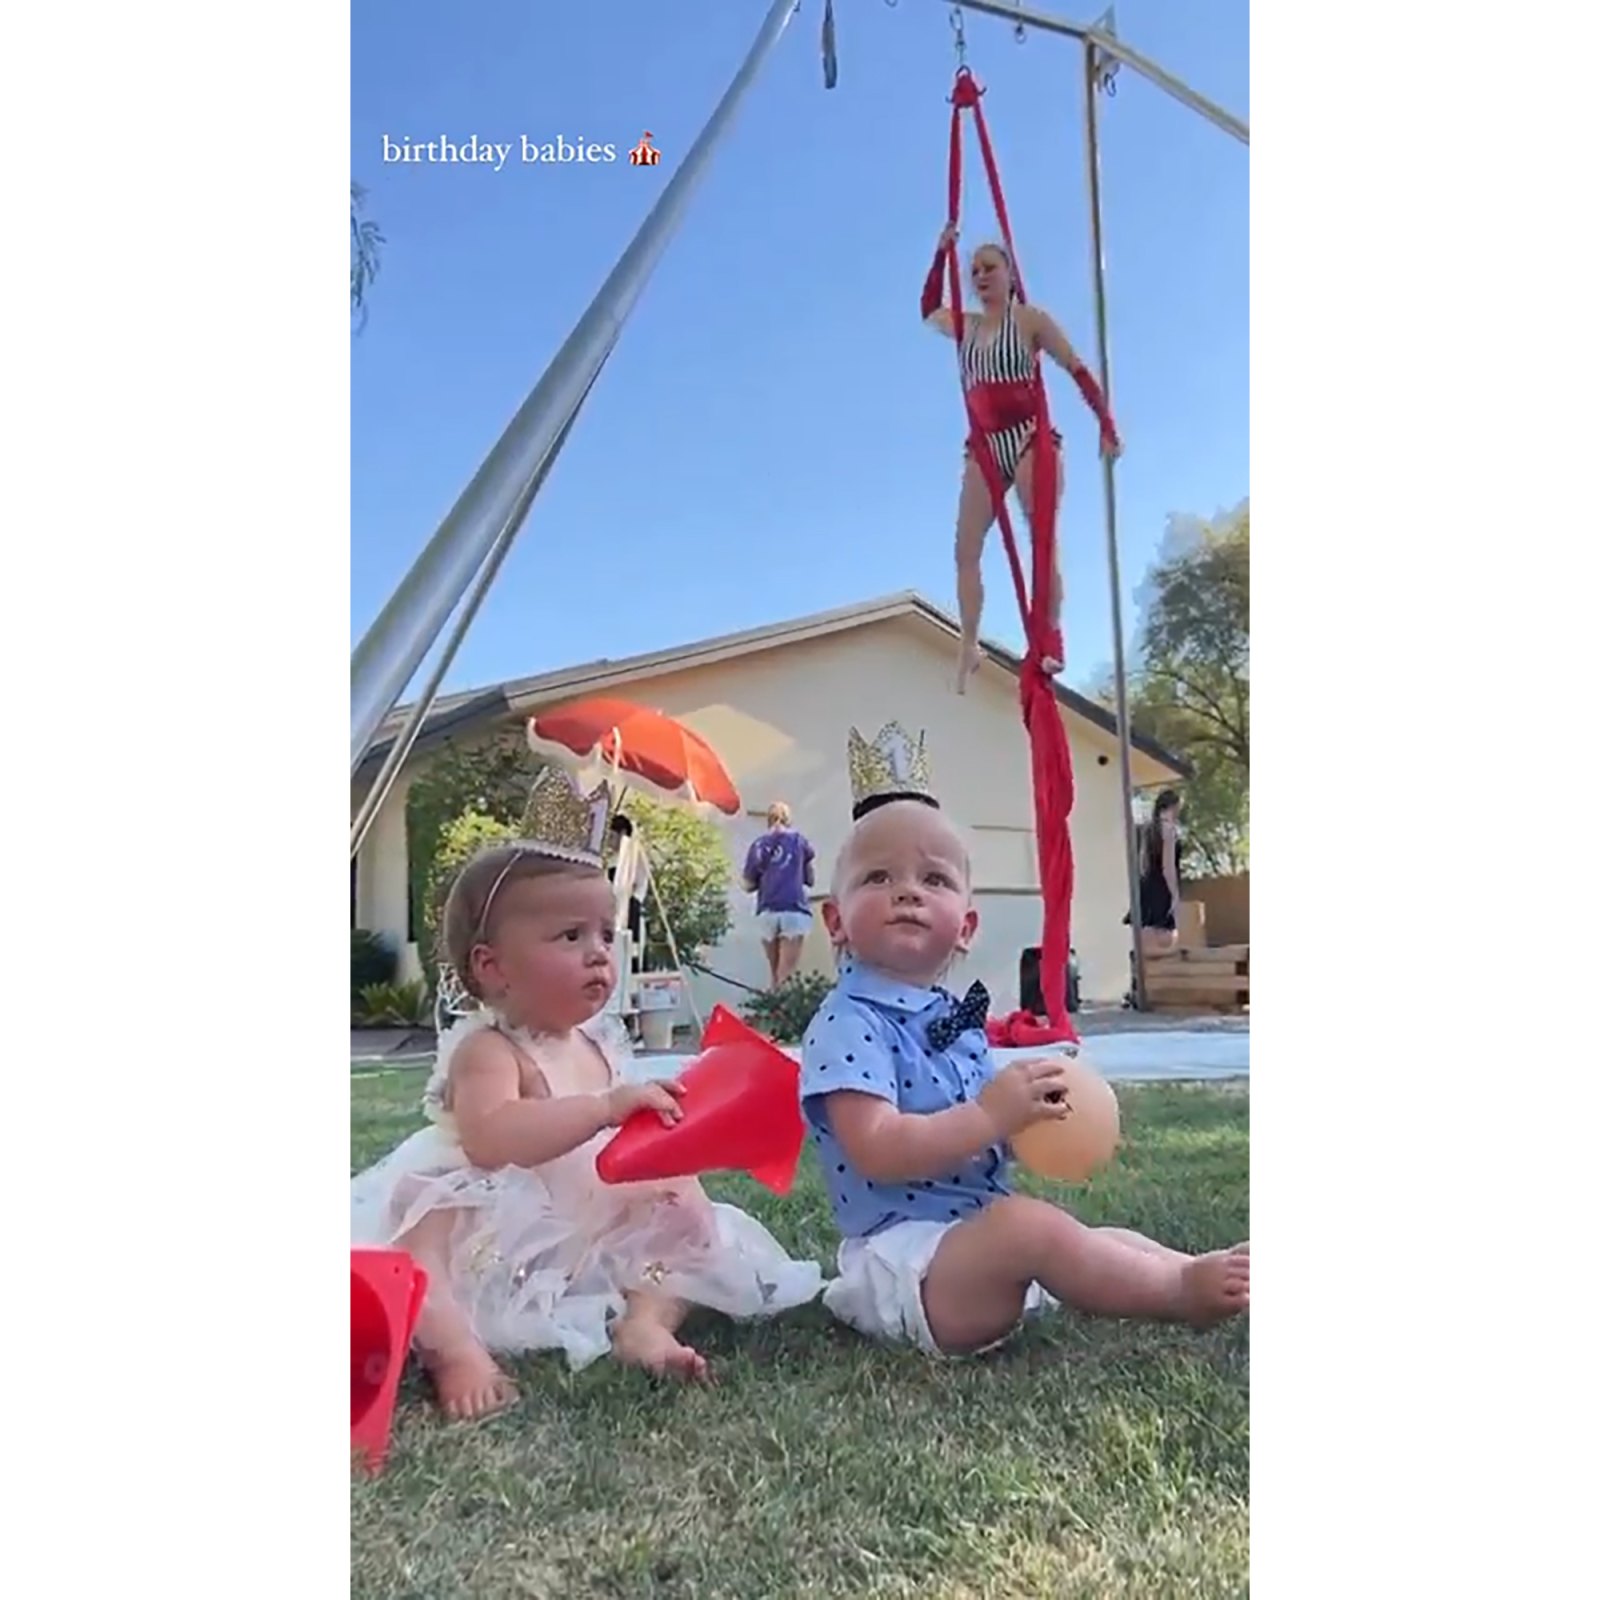 Arie Luyendyk, Jr. and Wife Lauren Burnham Throw Circus-Themed Birthday for Twins Lux and Senna's 1st Birthday: Photos